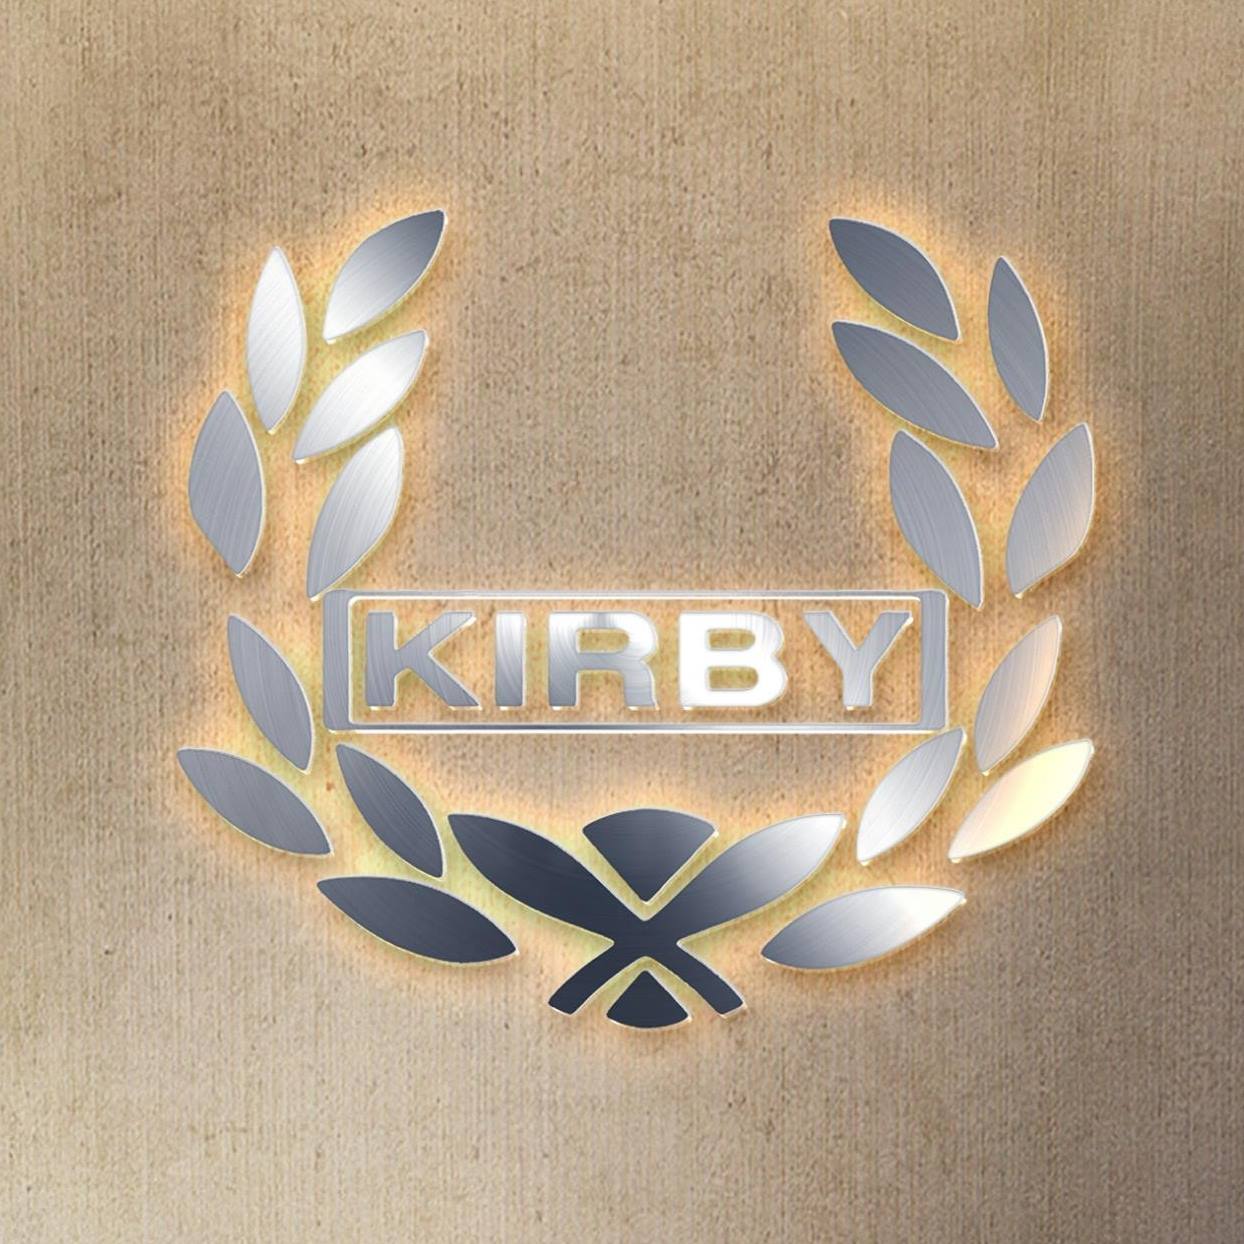  Kirby Company - كيربي